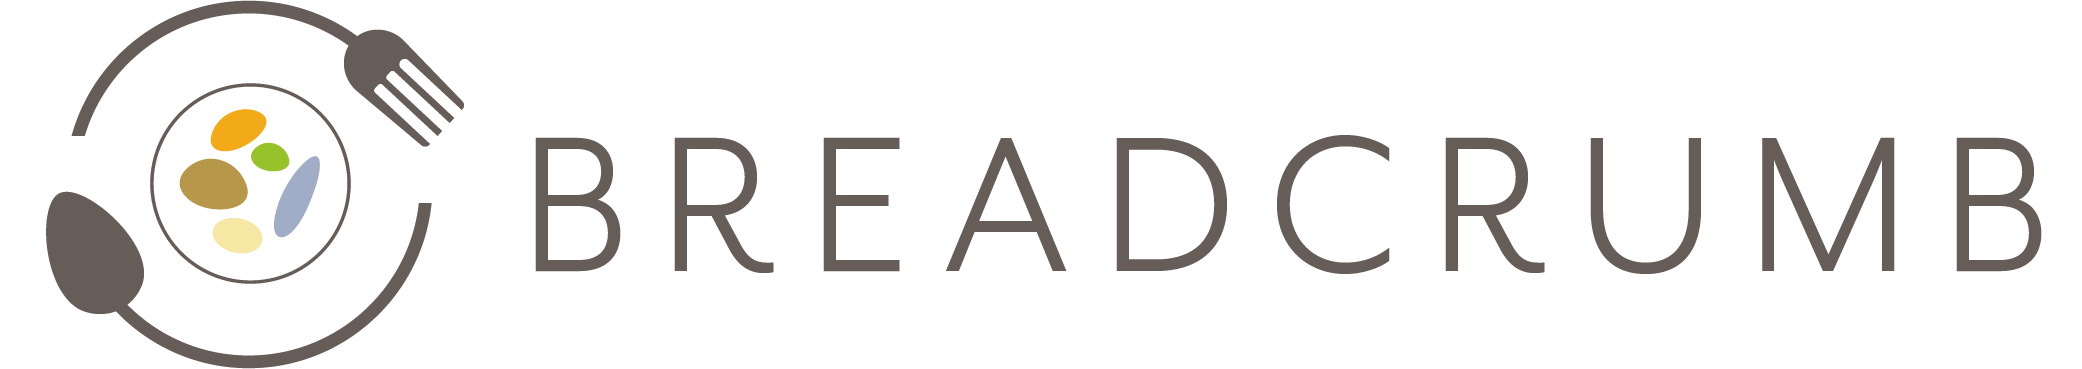 BREADCRUMB
        logo